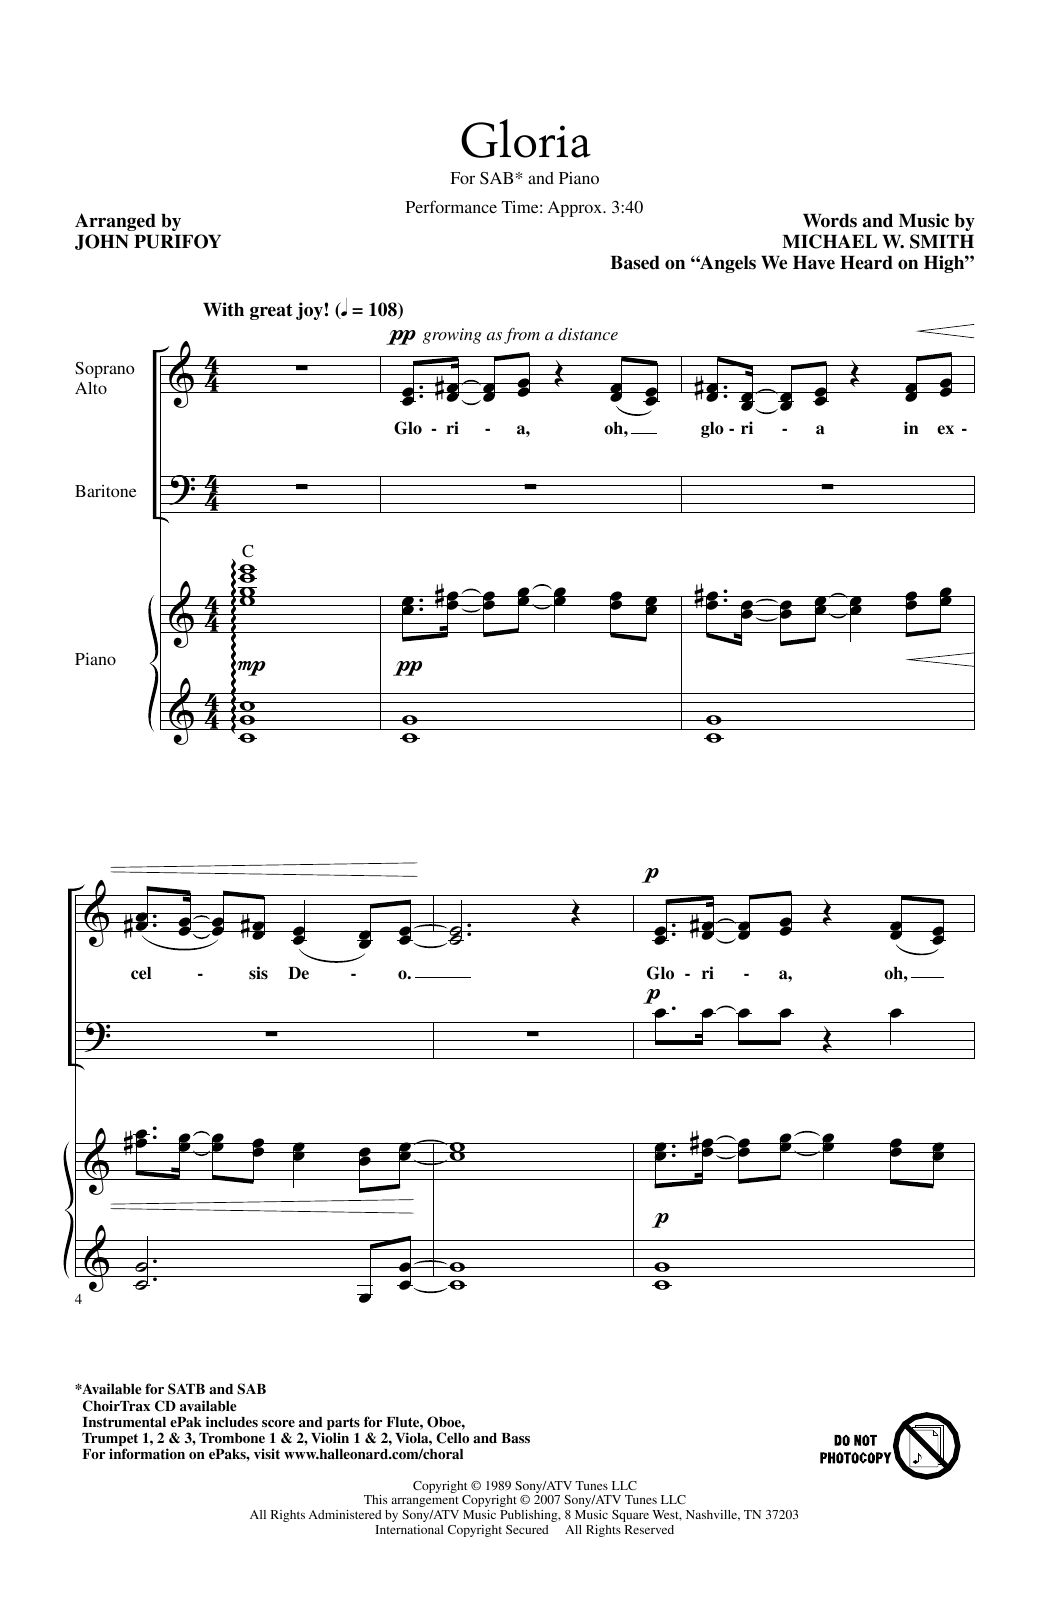 Michael W. Smith Gloria (arr. John Purifoy) Sheet Music Notes & Chords for SAB Choir - Download or Print PDF